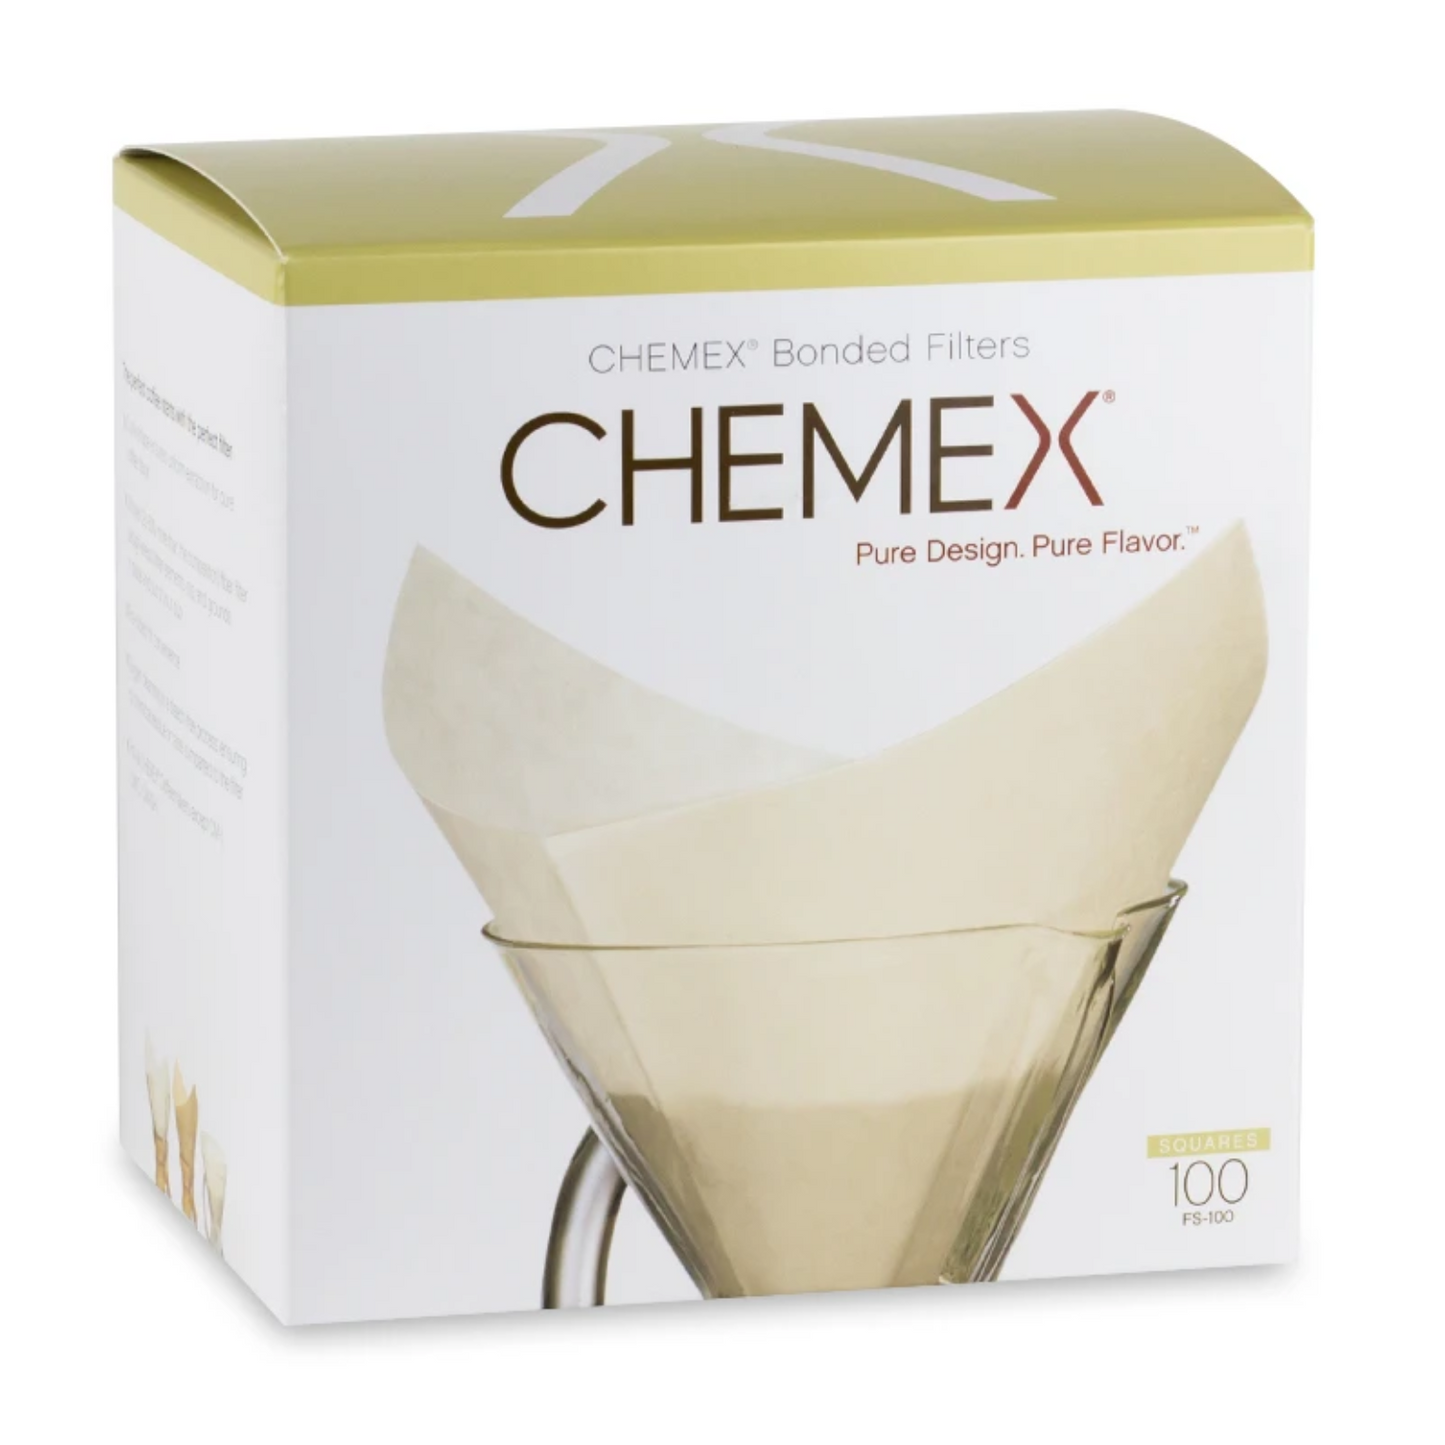 Chemex Bonded Filters FS-100 - Square